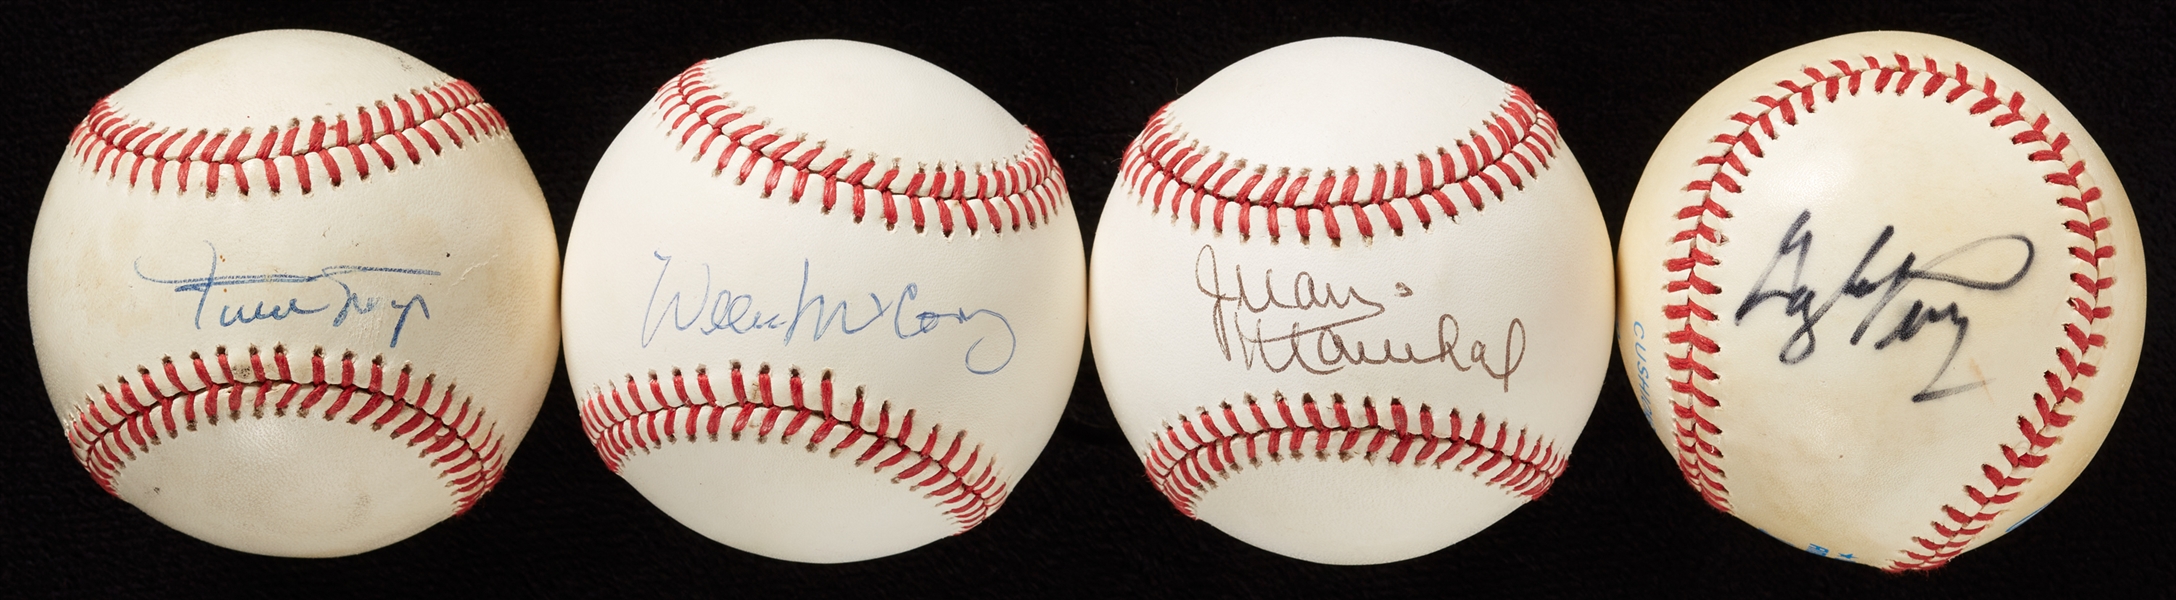 HOFer Single-Signed Baseballs Group with Willie Mays (4)